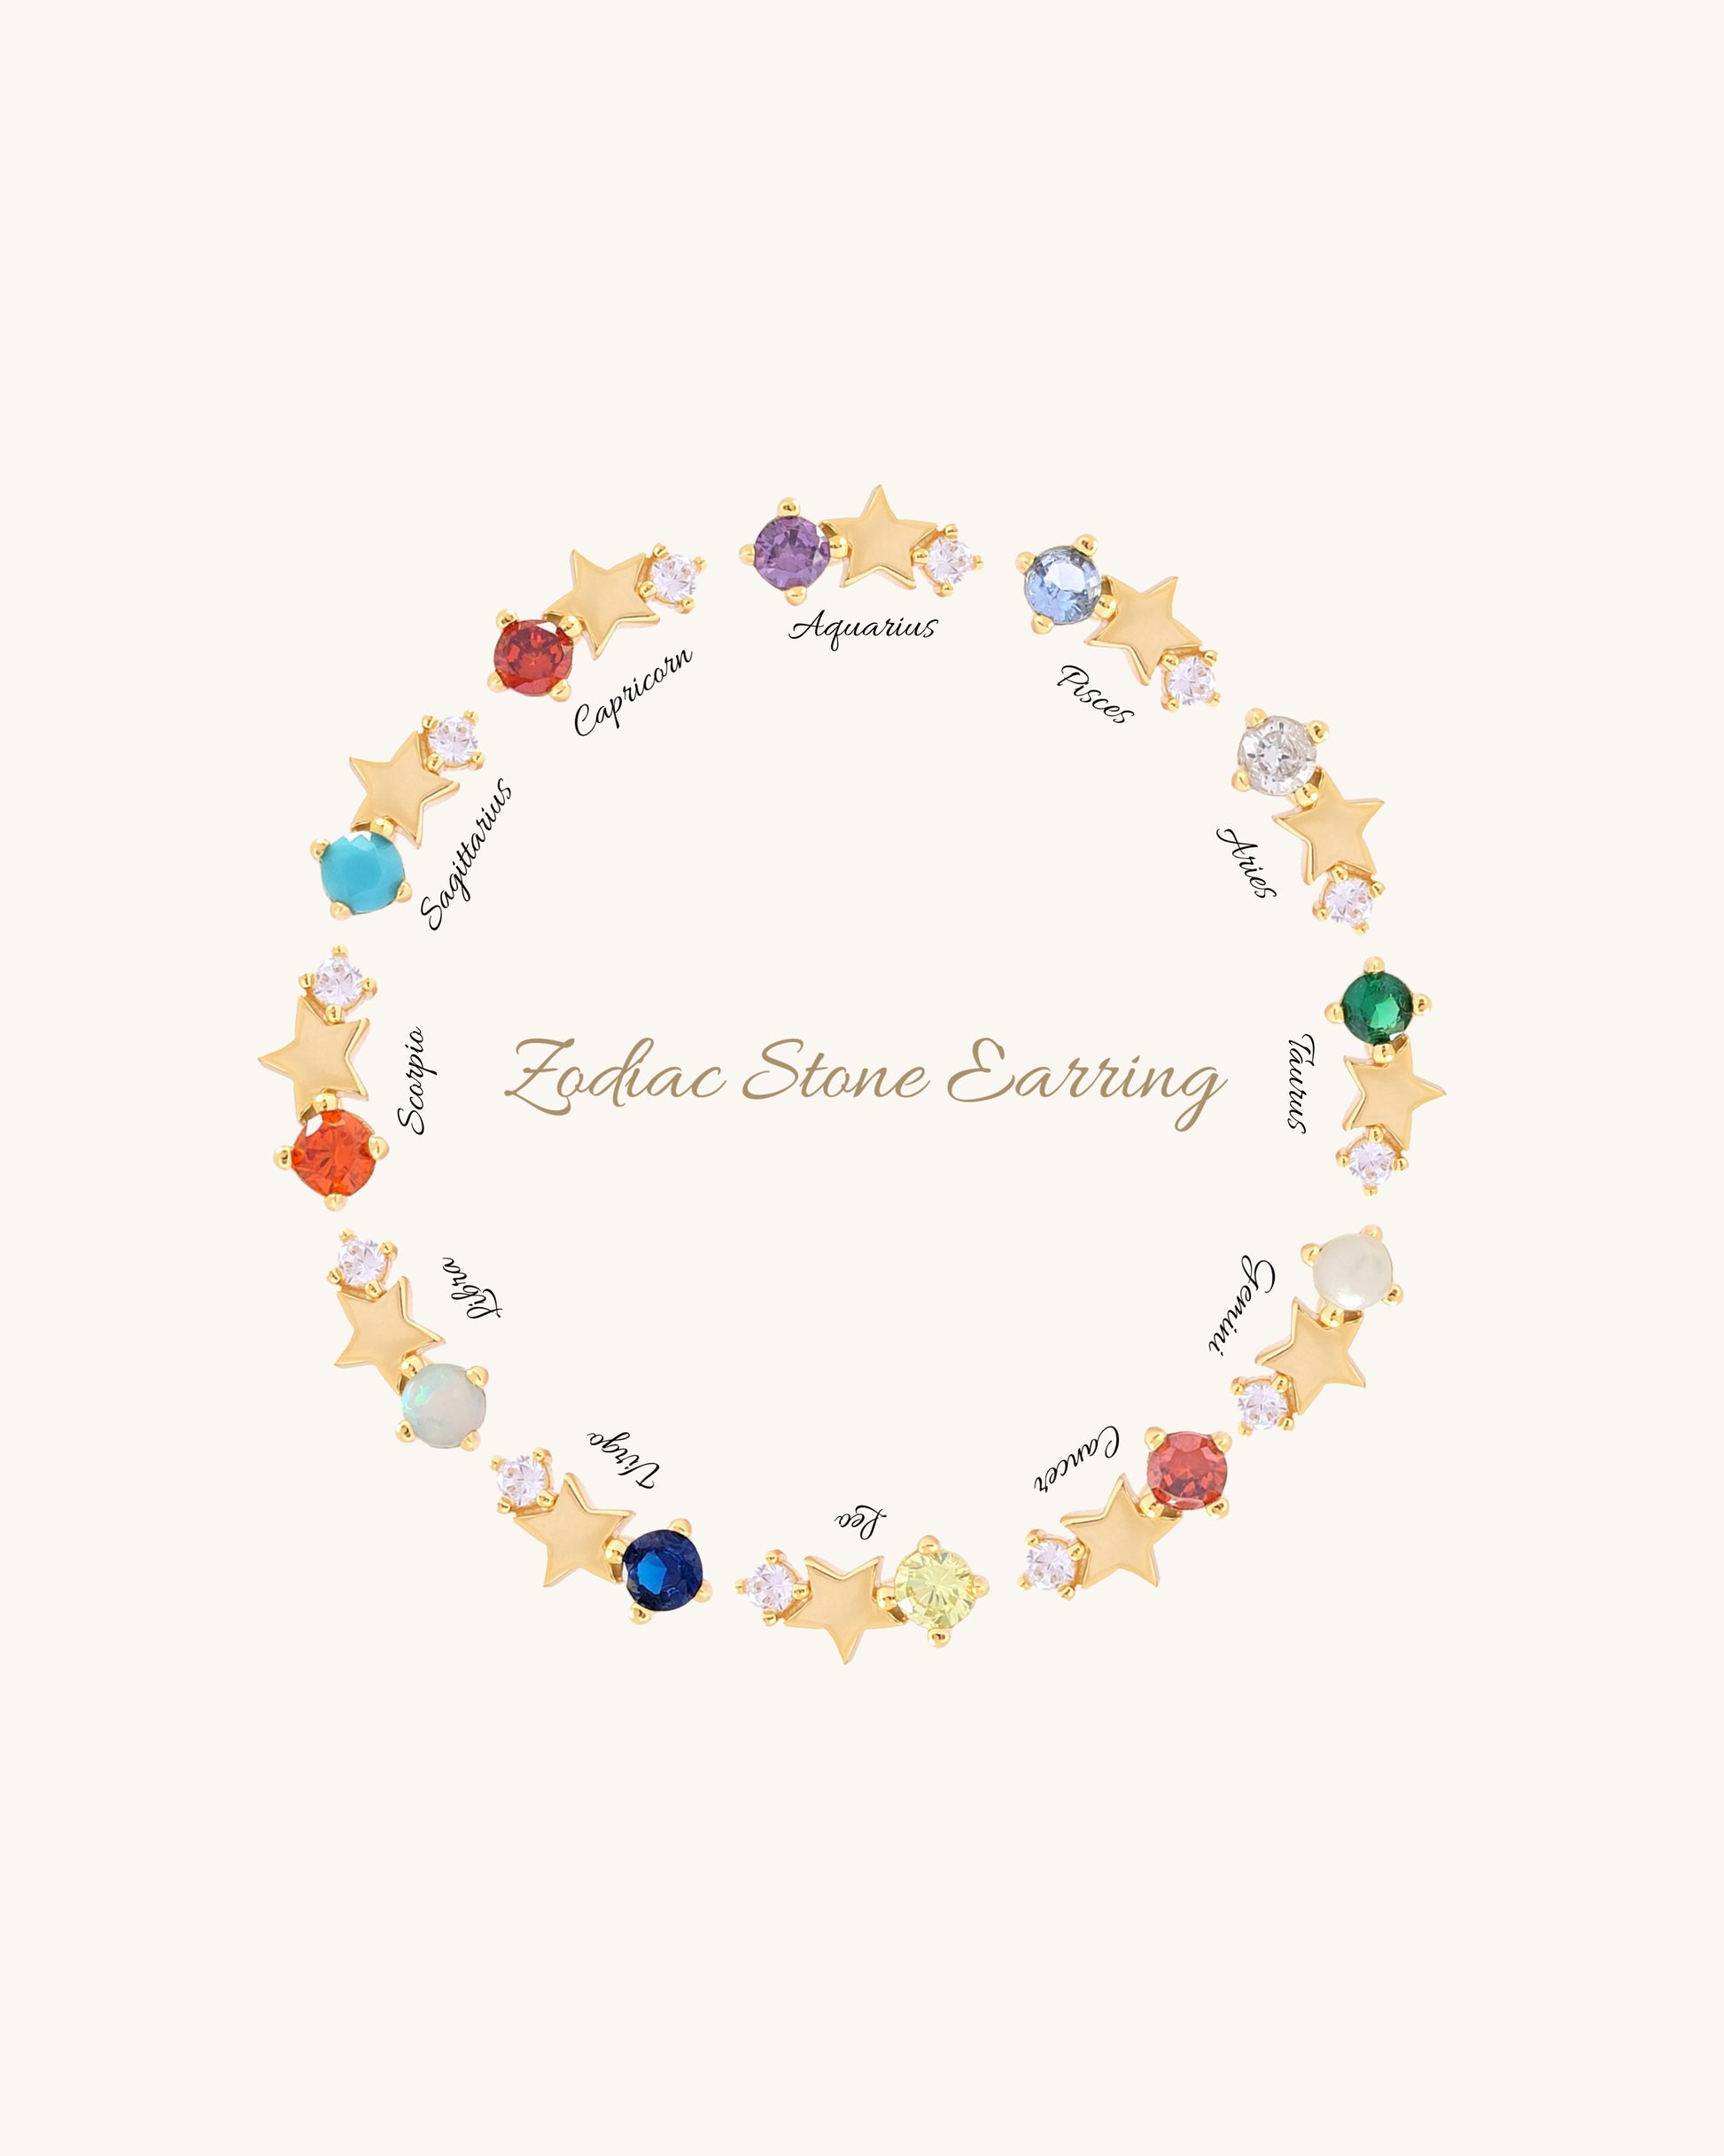 Leo jewellery: Star Zodiac Constellation Earring